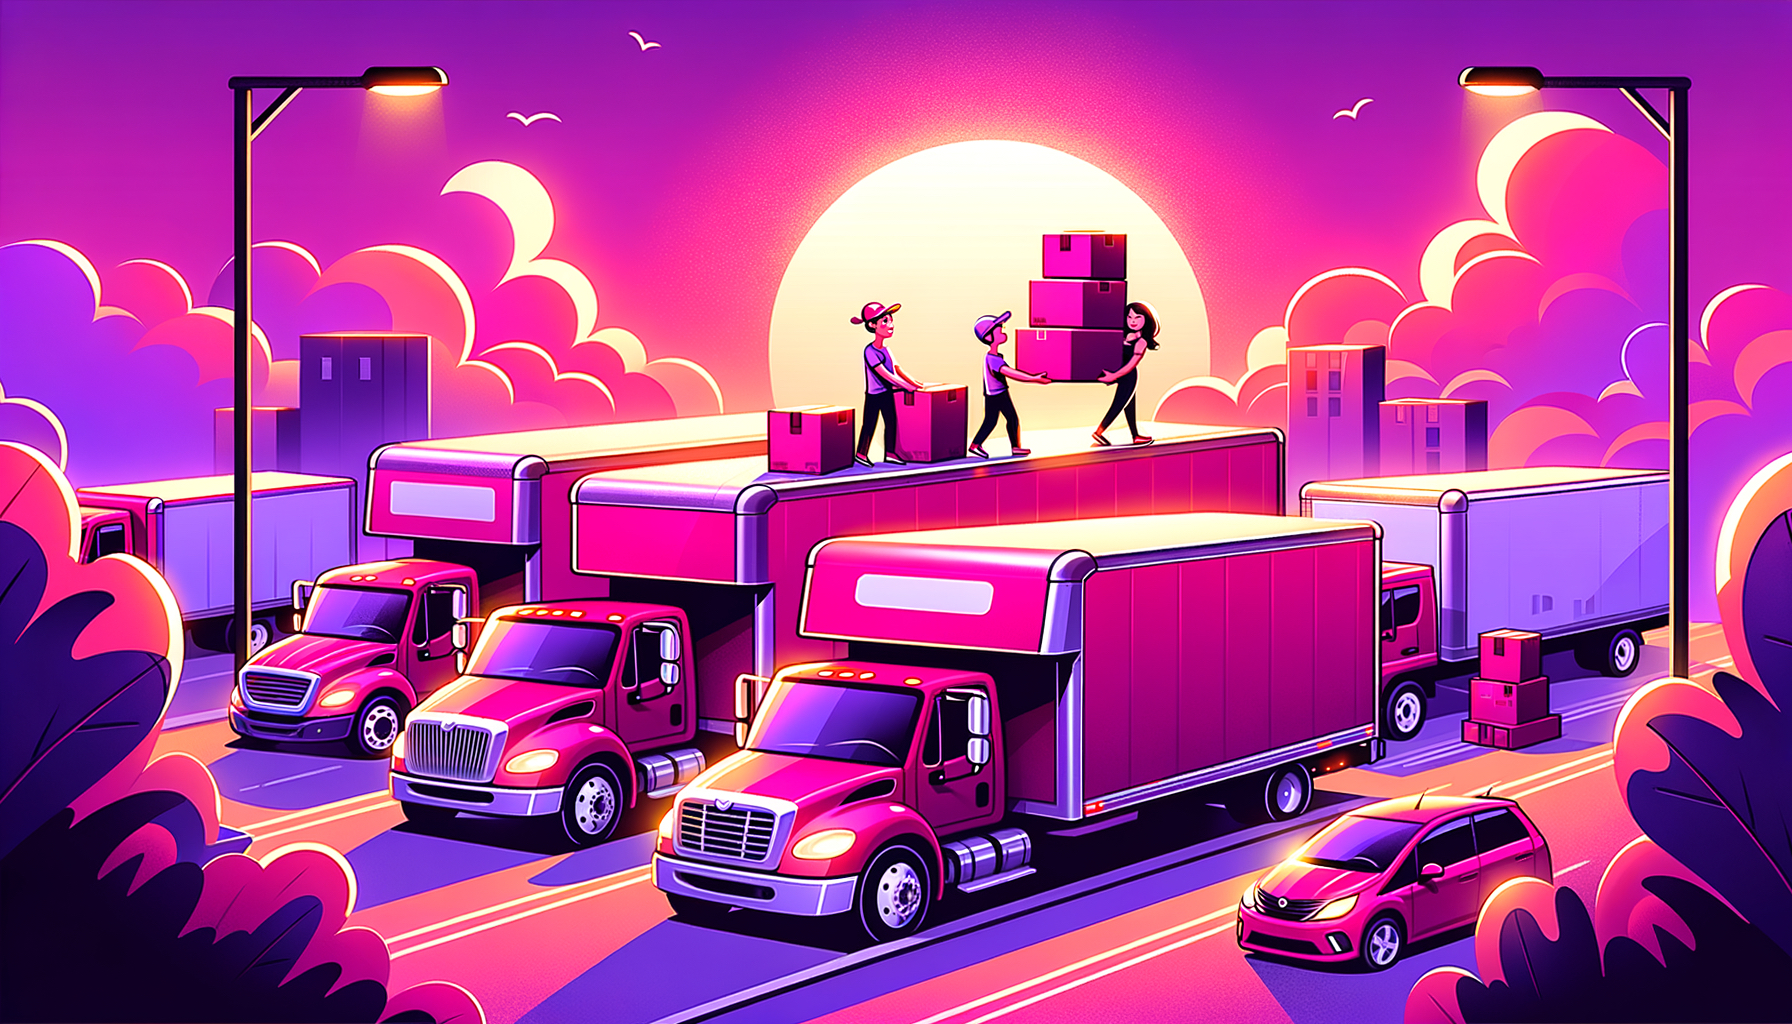 Illustration of a cartoon-like fuschia colored moving truck denoting comparison of truck rental companies.